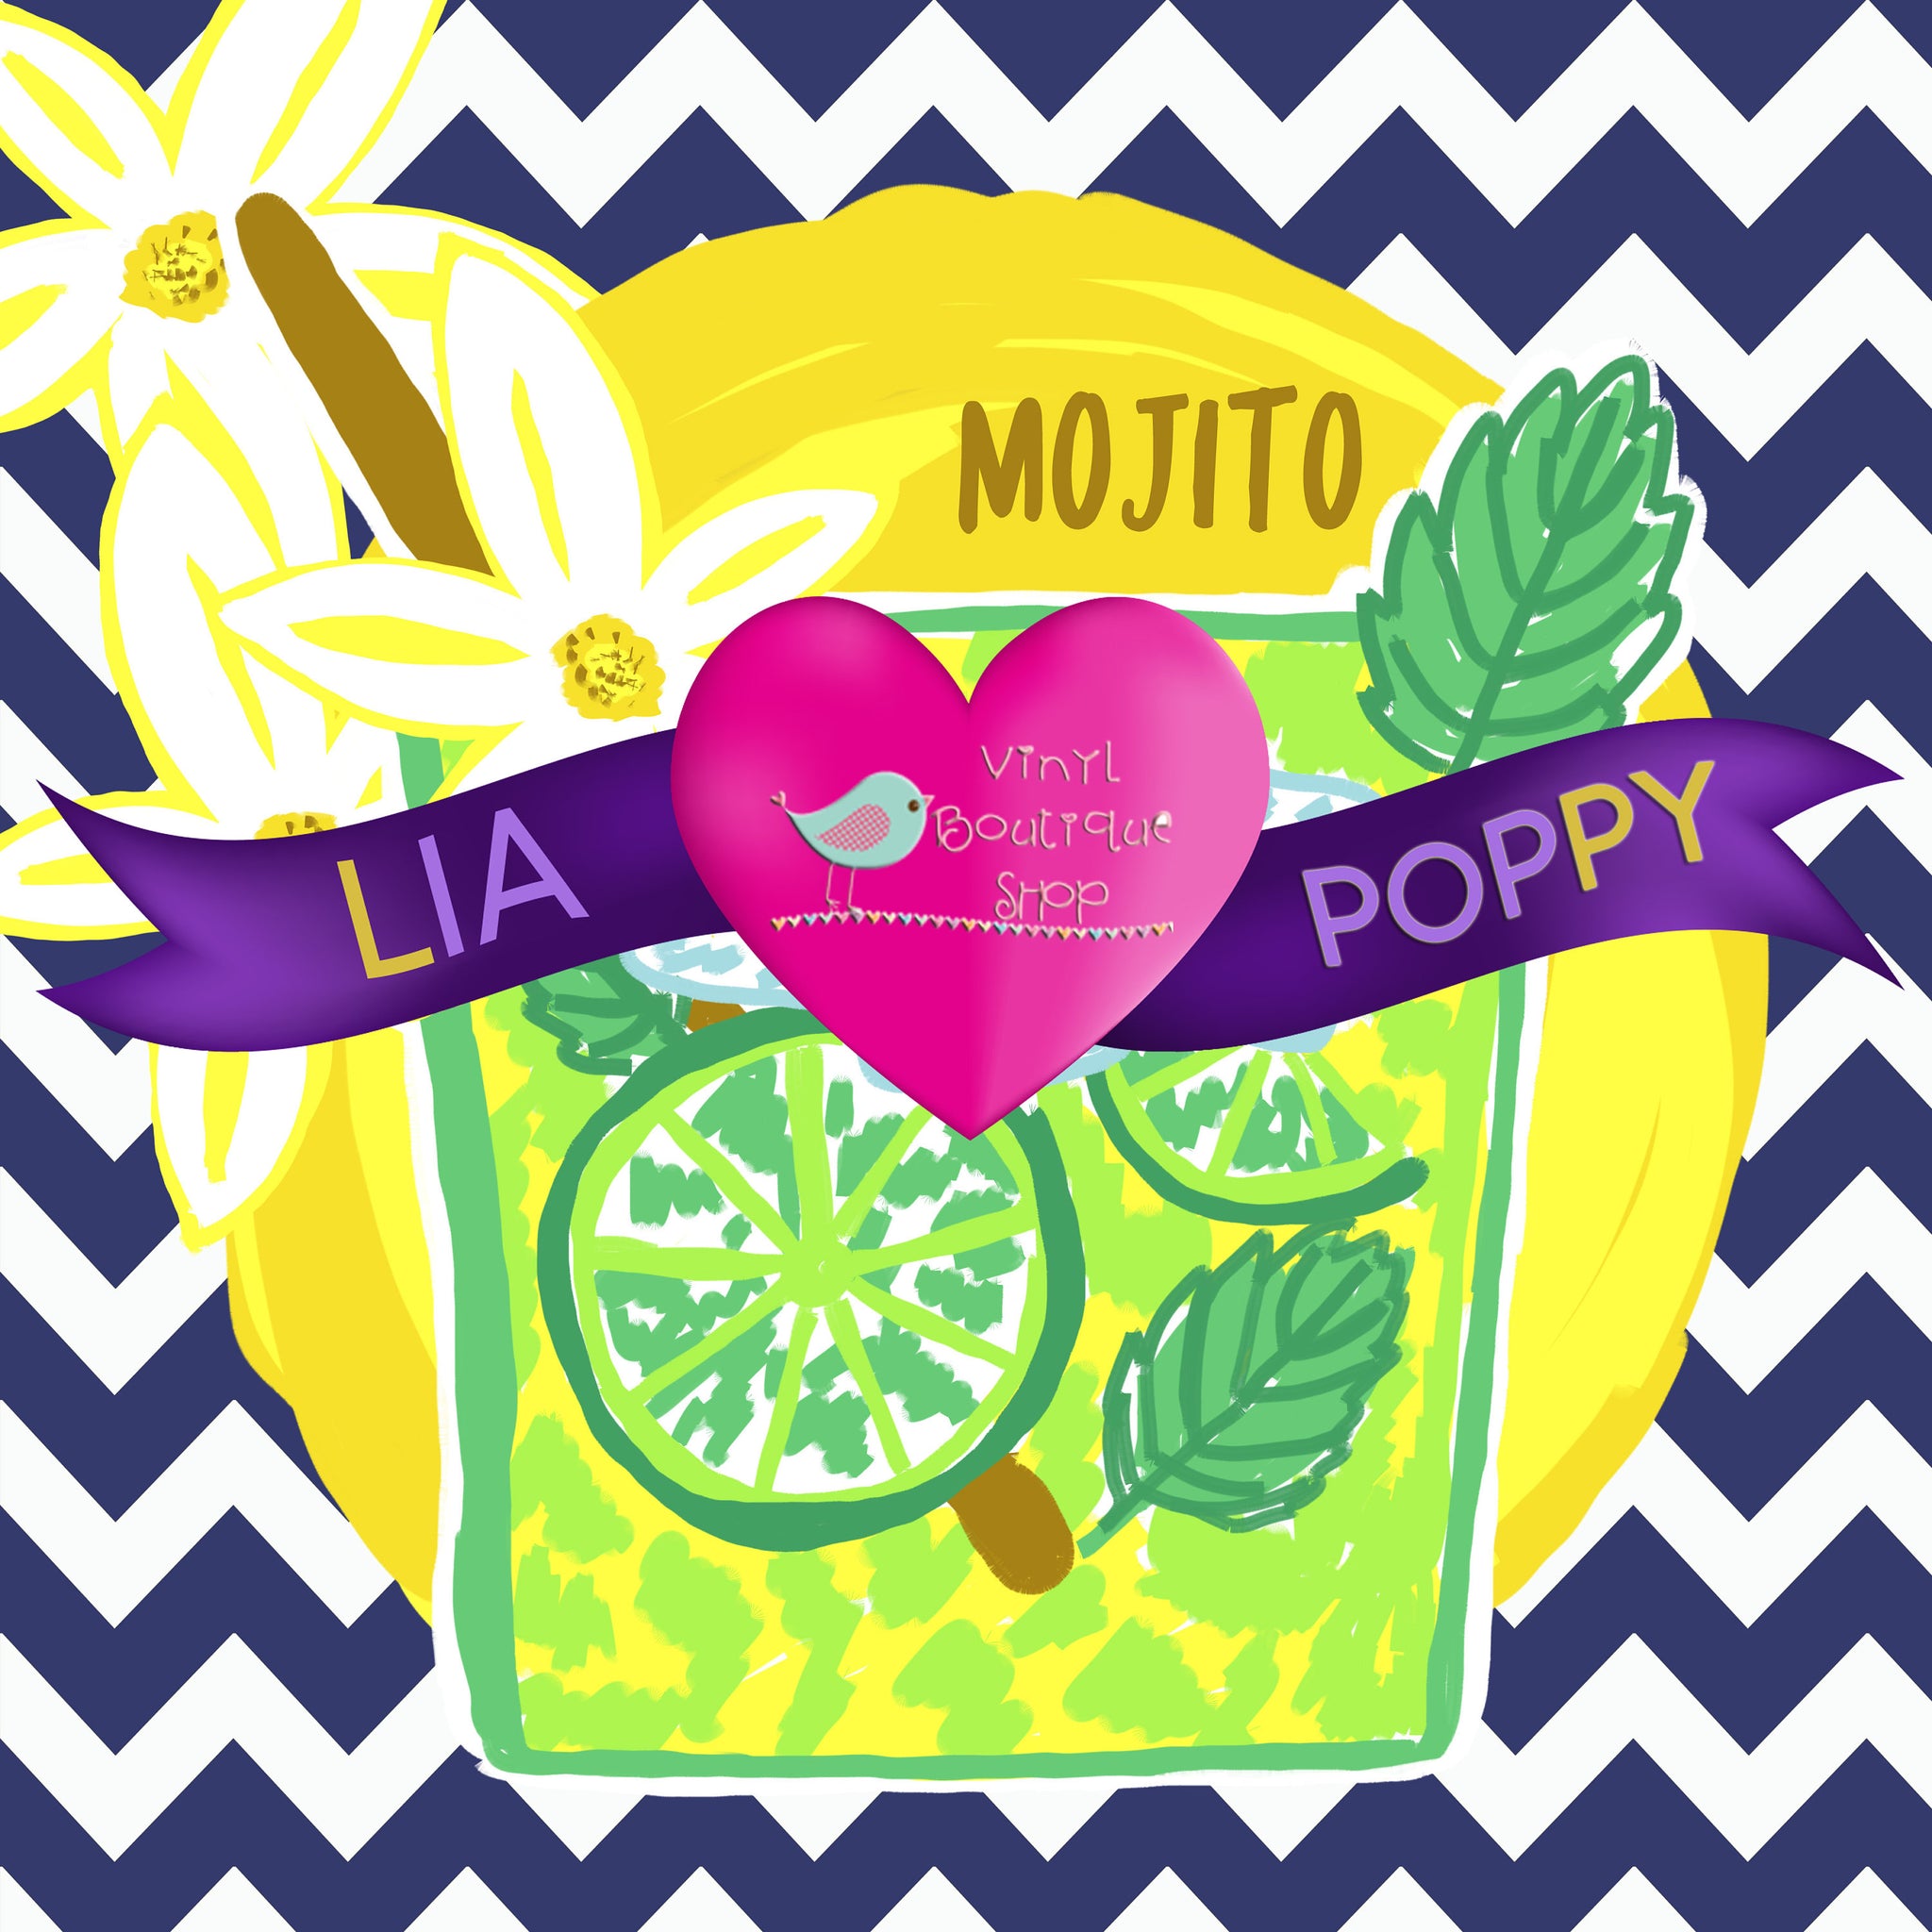 Mojito Lia Poppy Vinyl Sheet LPY-112 - Vinyl Boutique Shop